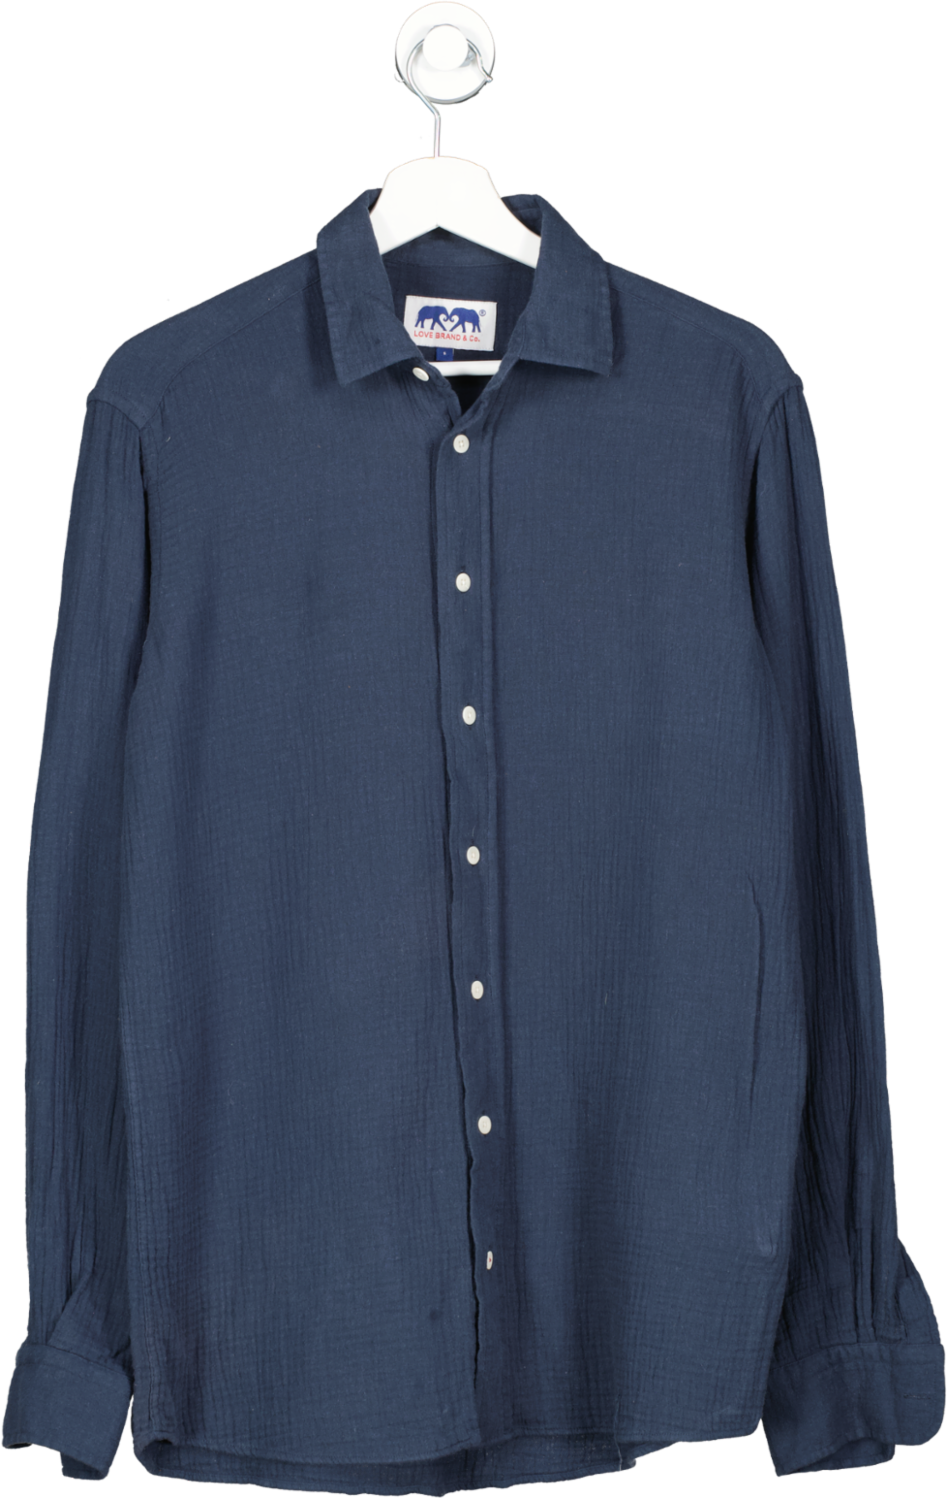 Brand & Co Blue Galliot Cotton Shirt UK S